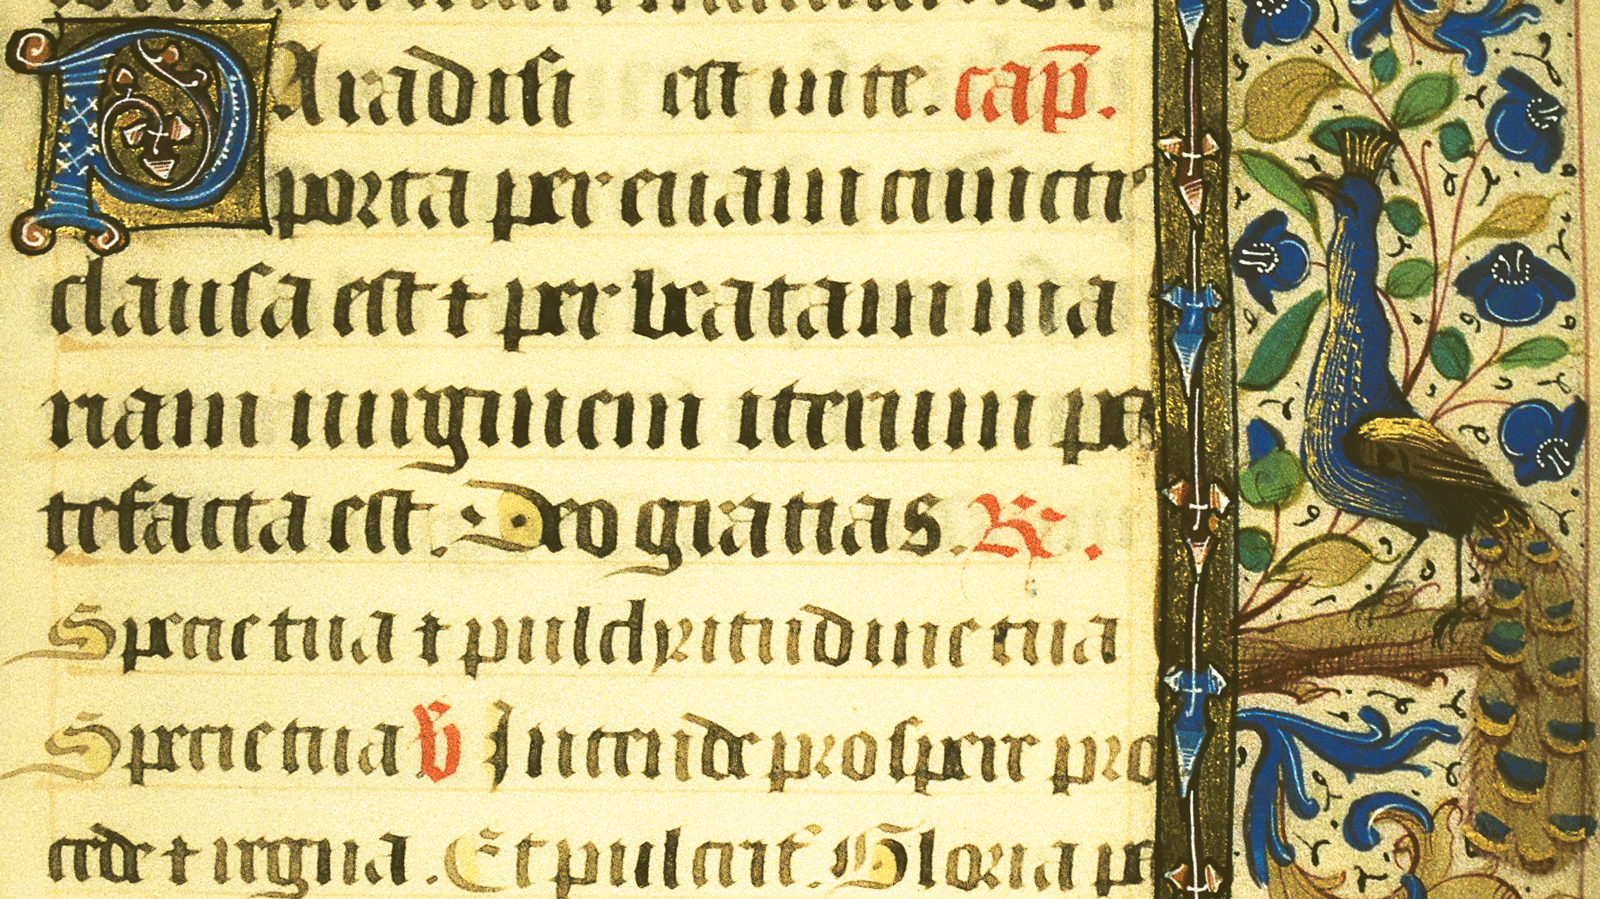 Latin text in illustrated manuscript